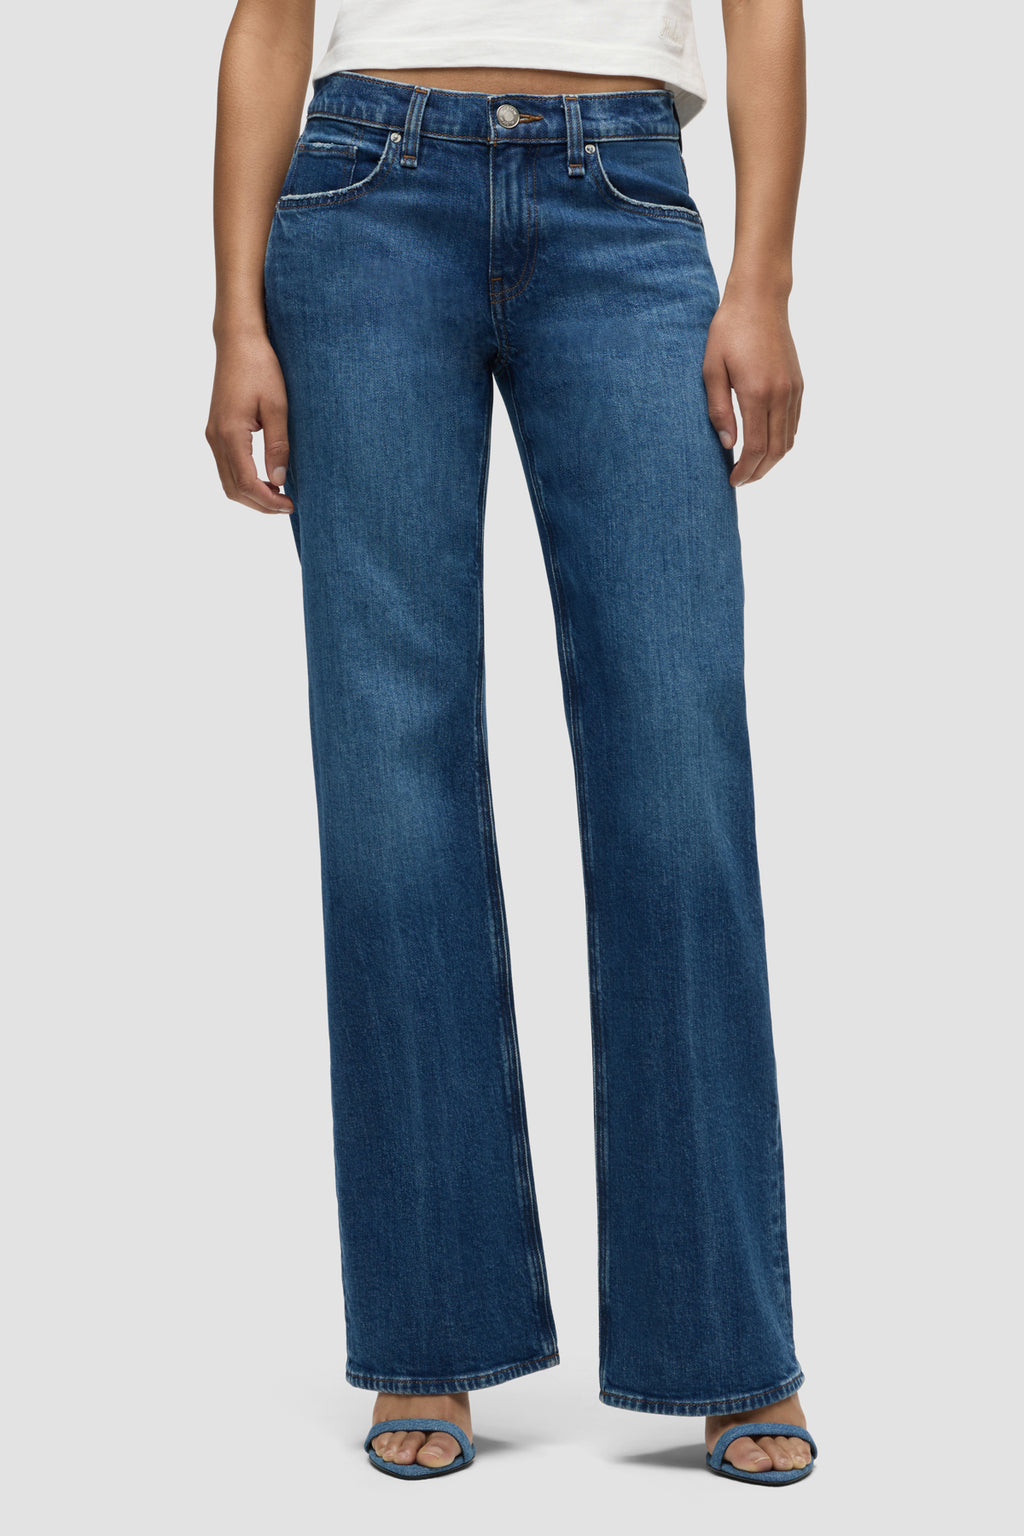 Kelli Low-Rise Straight Jean